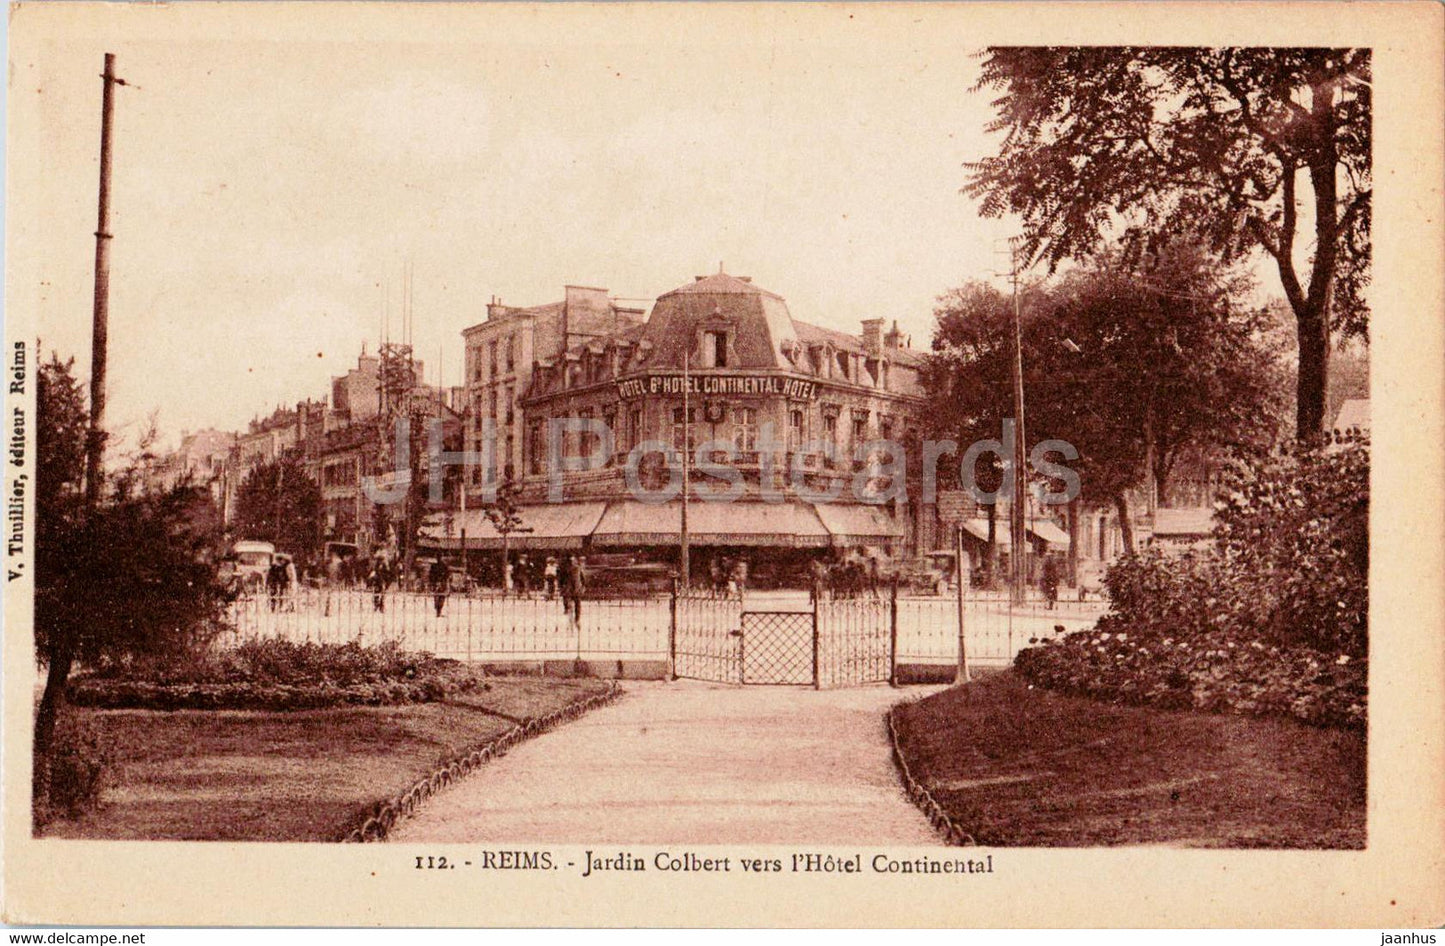 Reims - Jardin Colbert vers l'Hotel Continental - hotel - 112 - old postcard - France - unused - JH Postcards